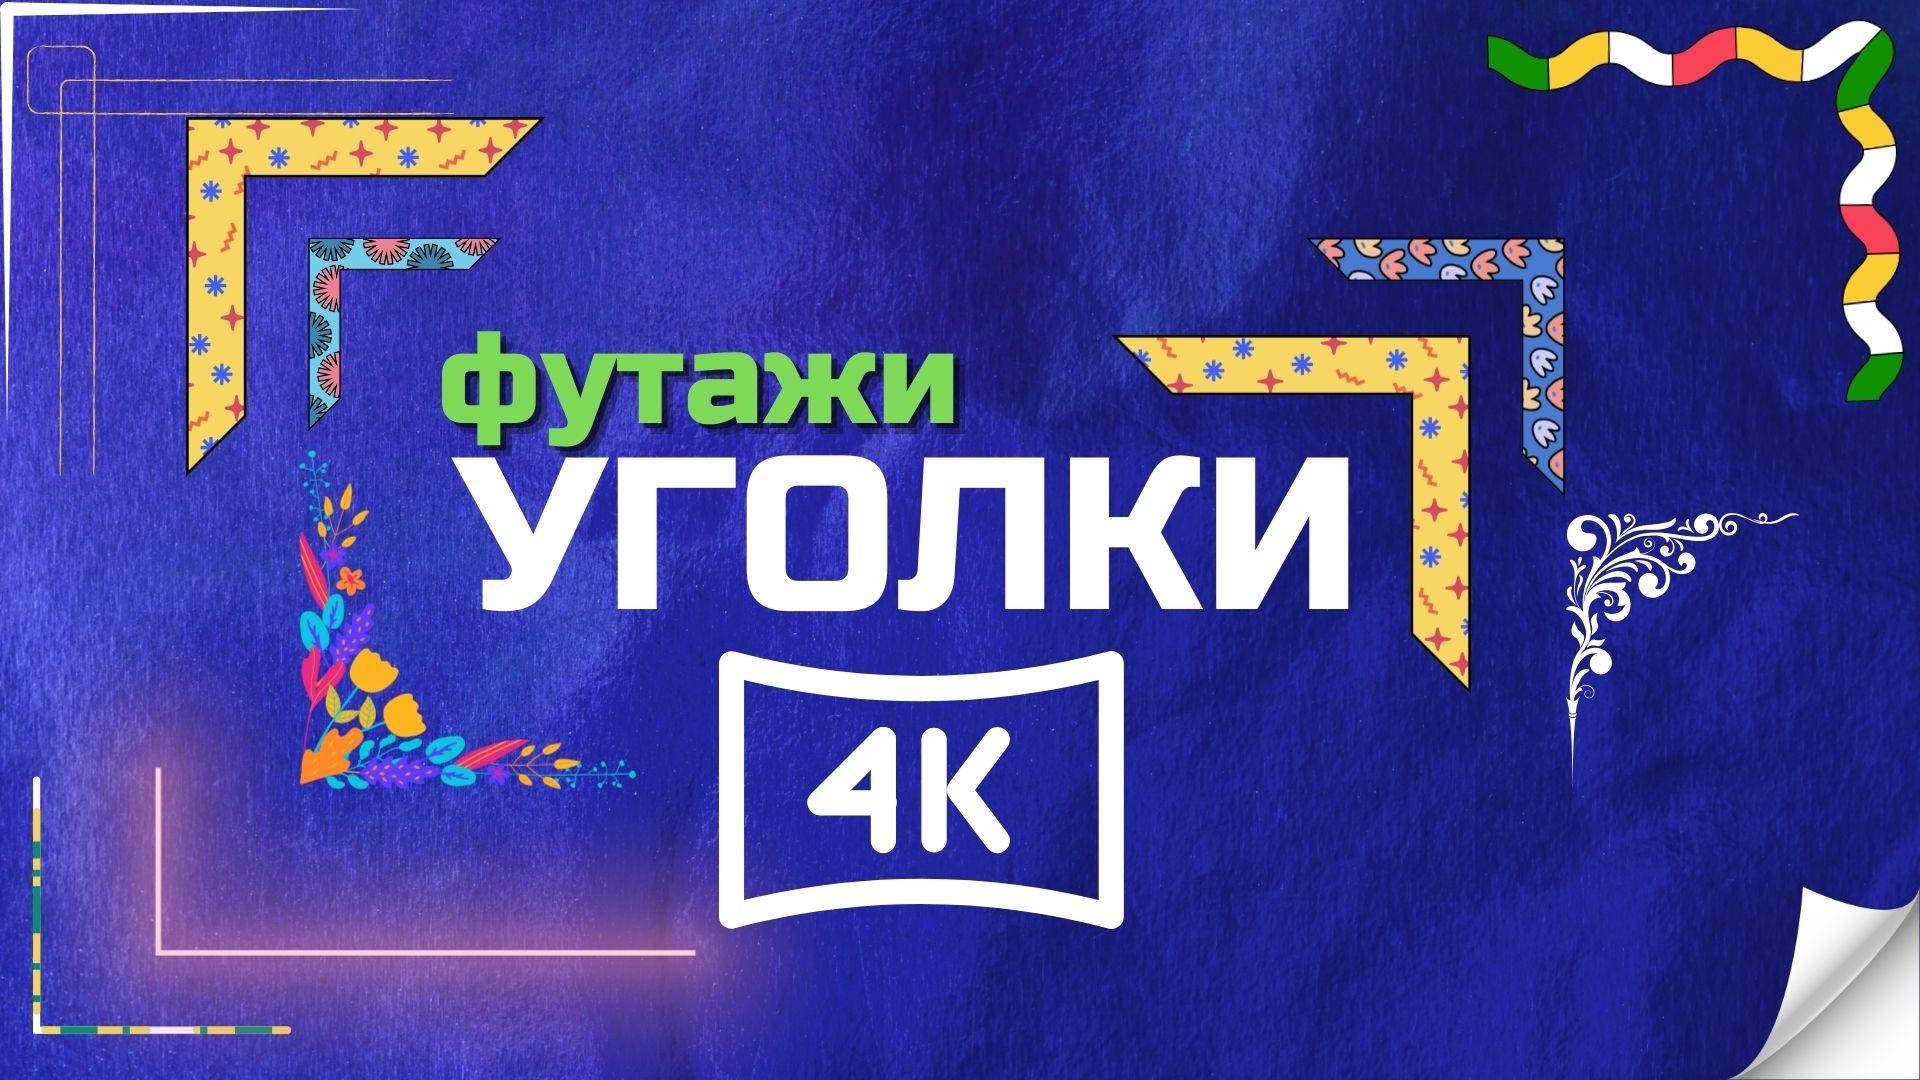 Футажи "УГОЛКИ" 4k (green screen FULL)